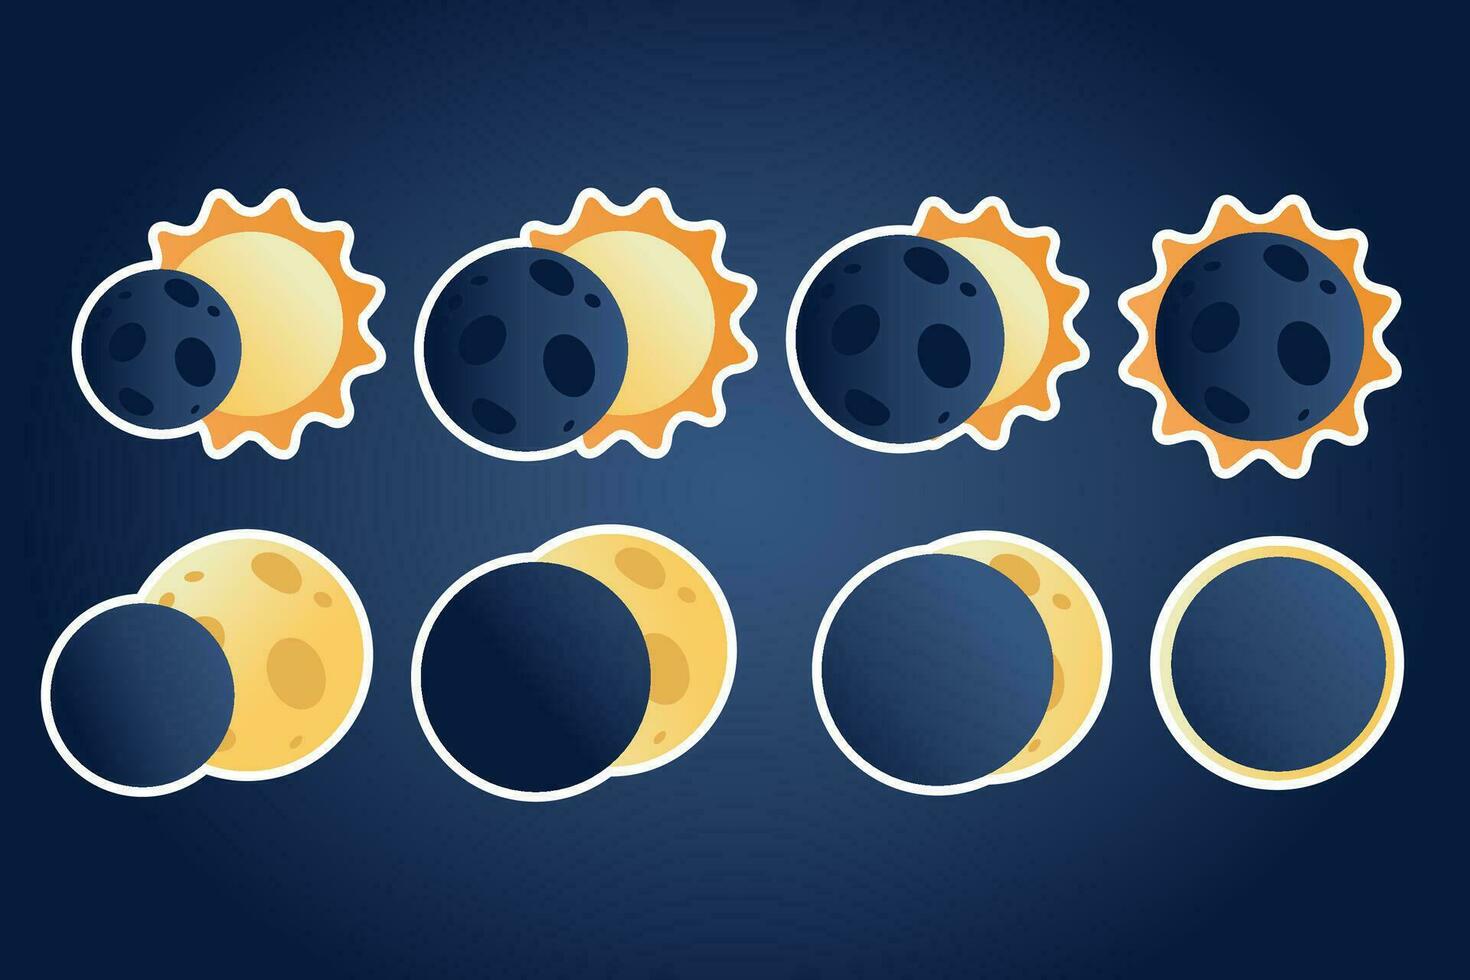 solar, lunar eclipse adesivos dentro plano desenho animado estilo vetor